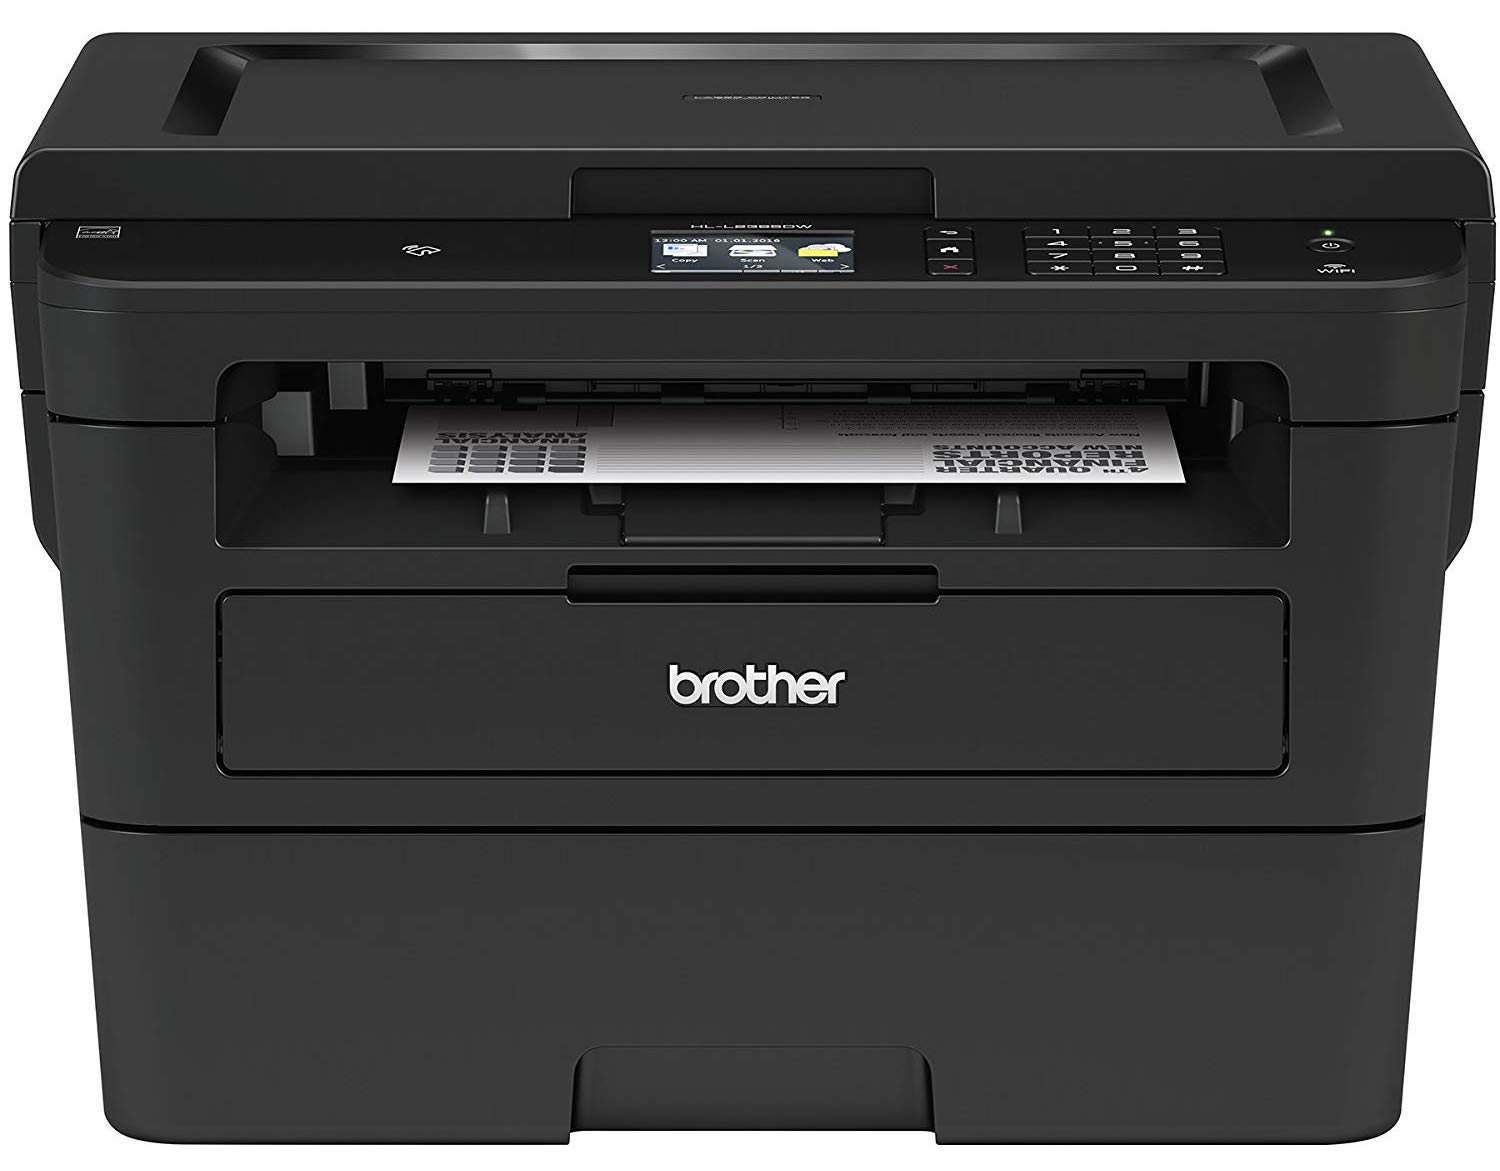 Brother printer kompak